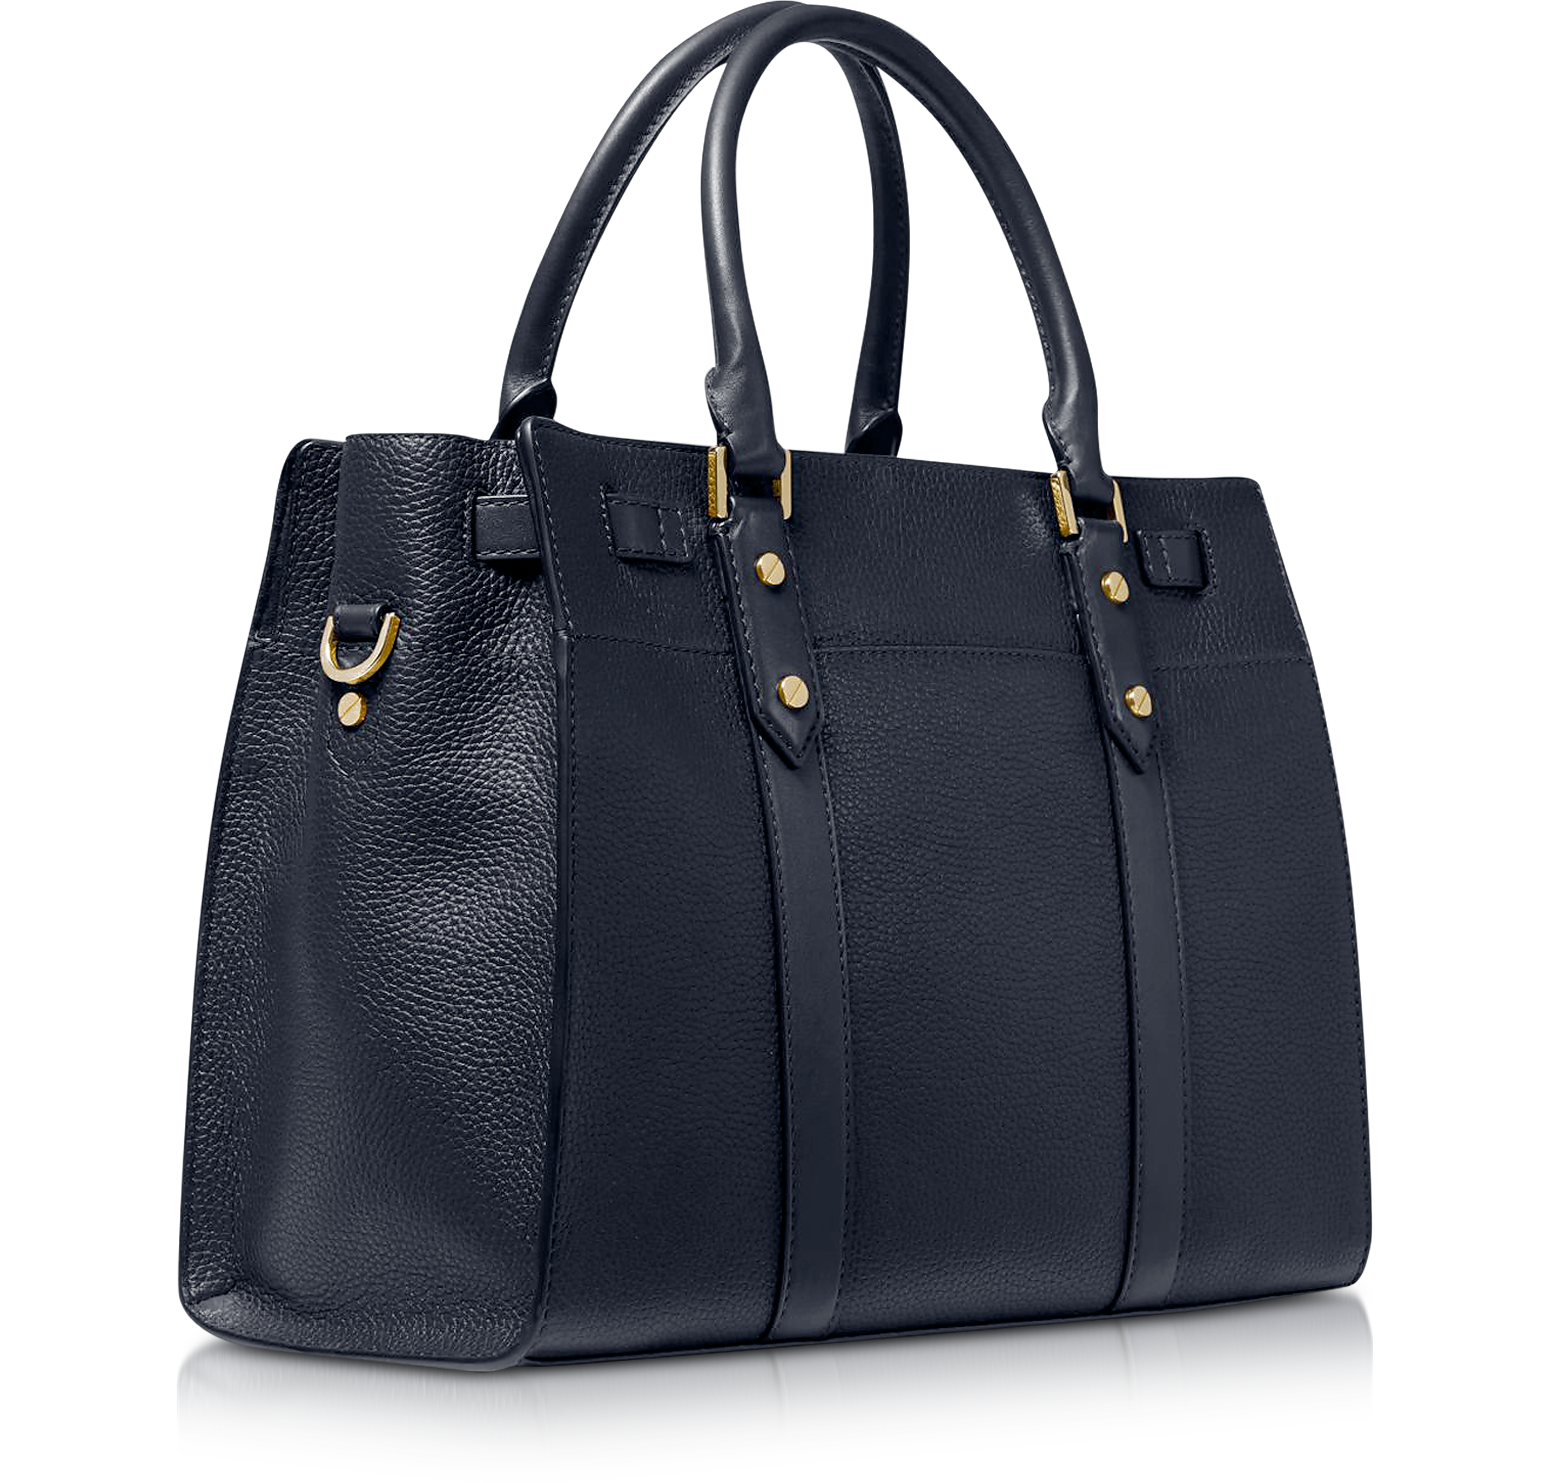 NWT Michael Kors Hamilton Traveler Large Leather Shoulder Handbag